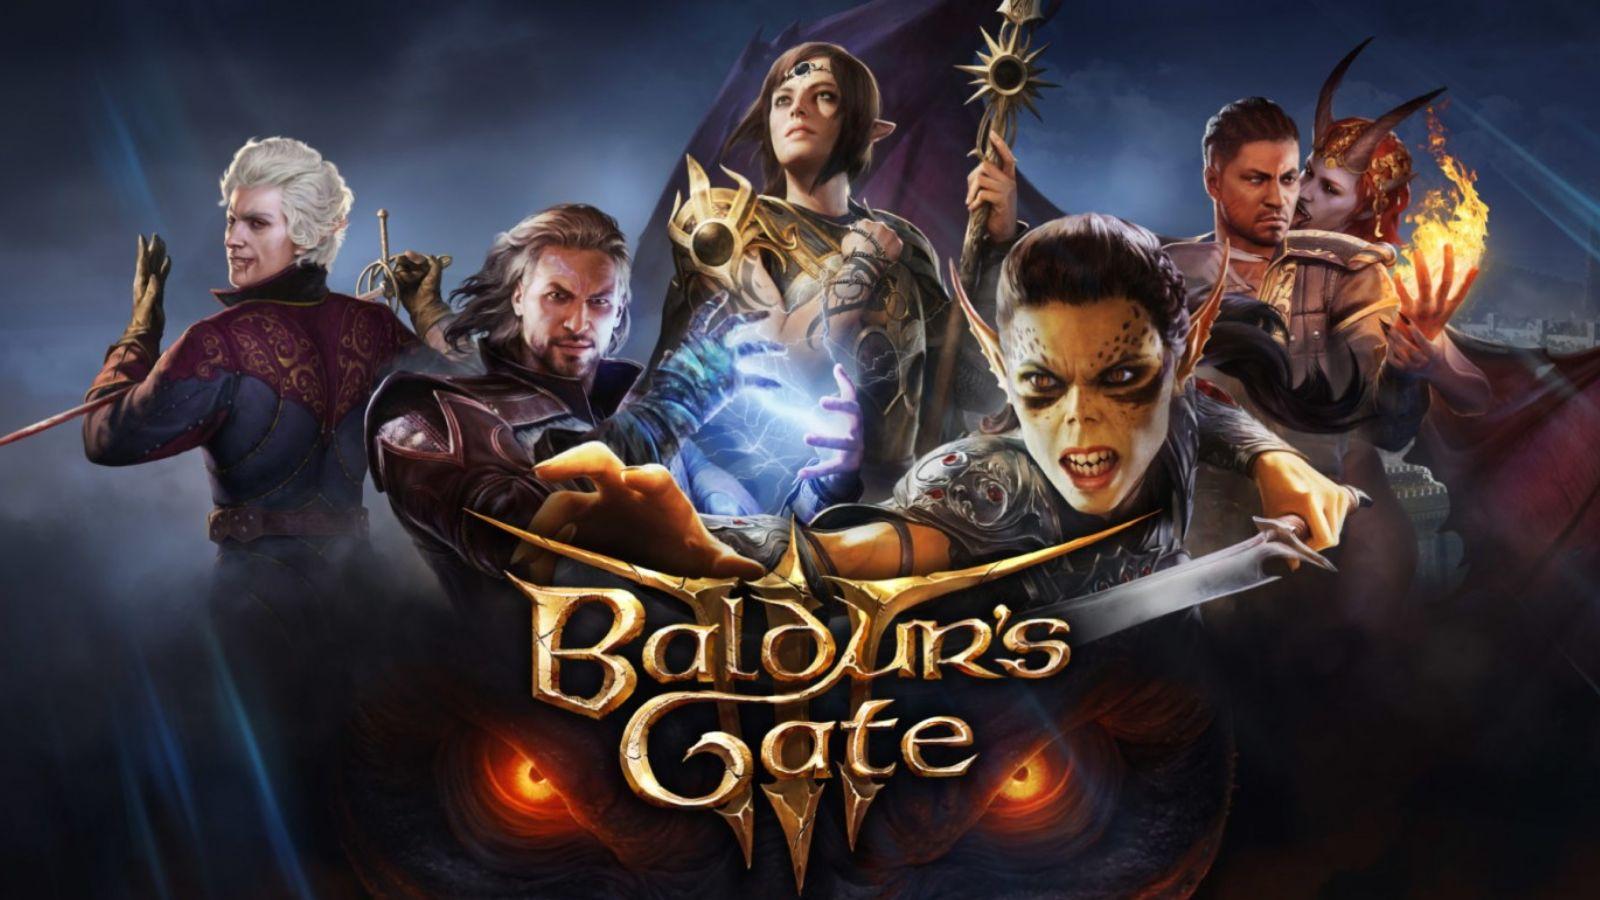 Baldur's Gate 3 release